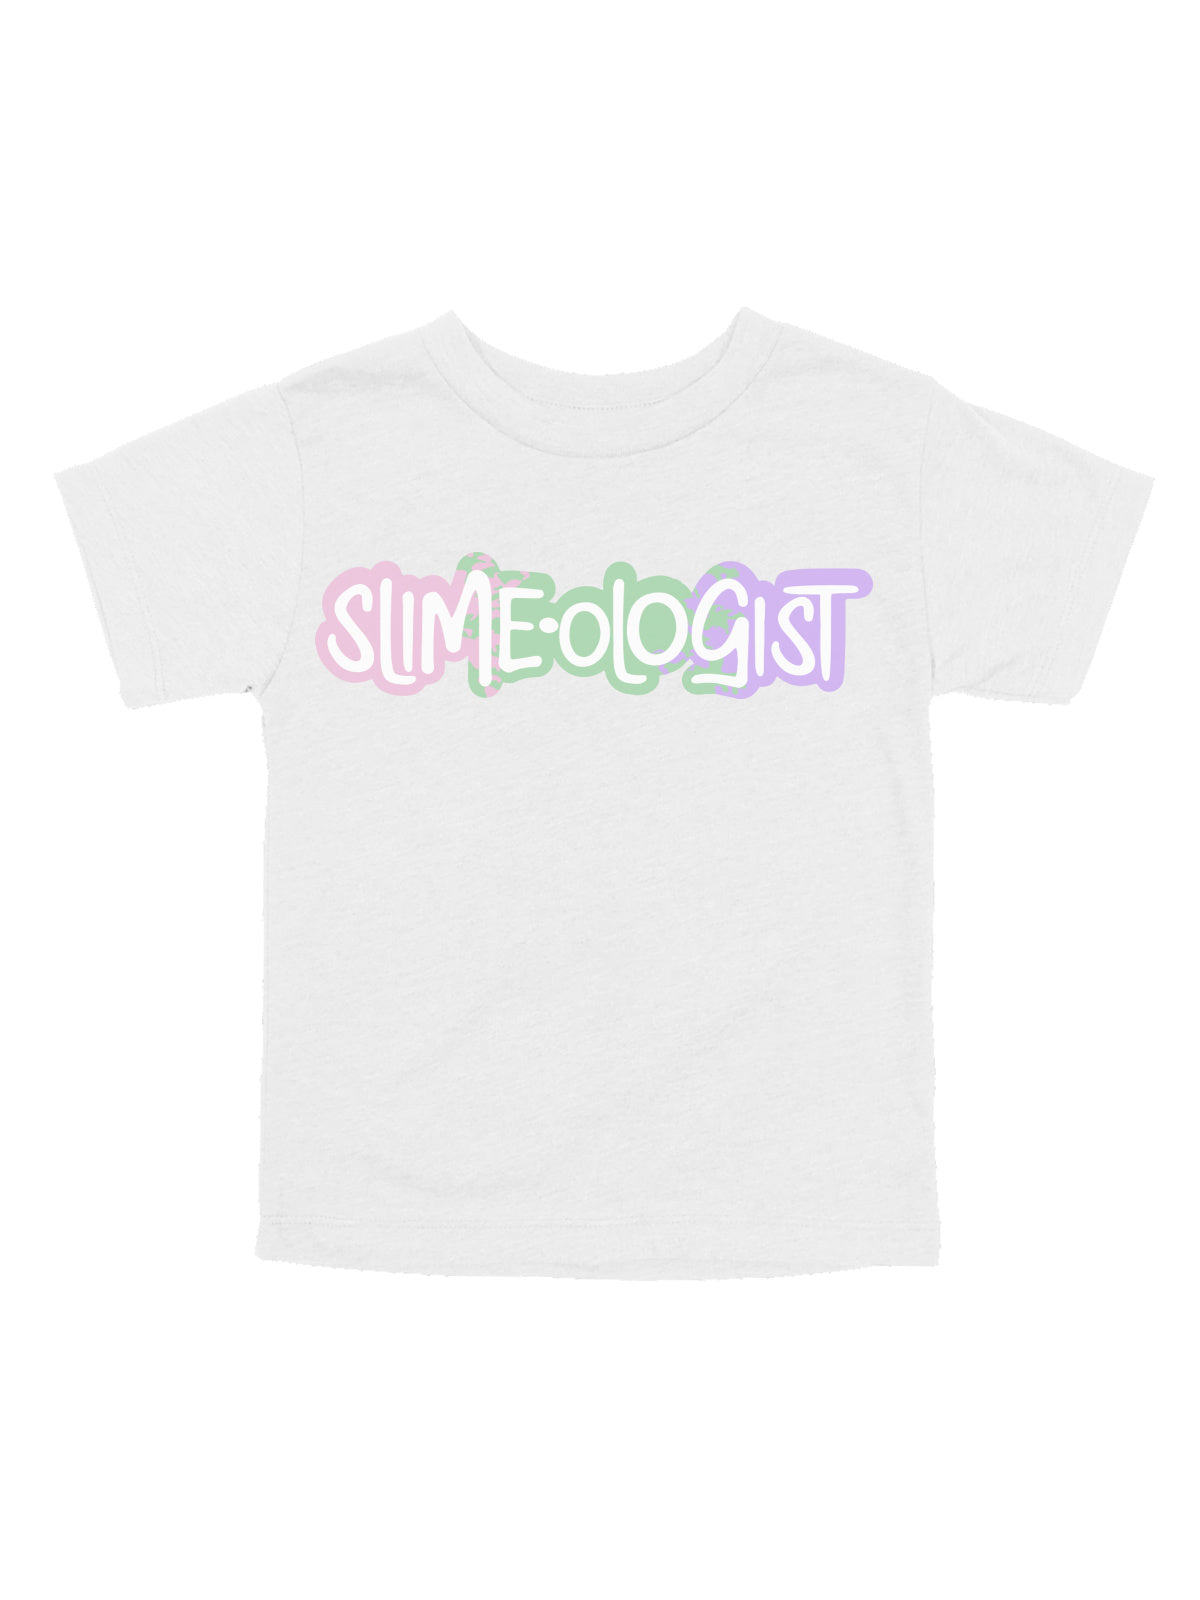 Slimeologist Kids White Shirt